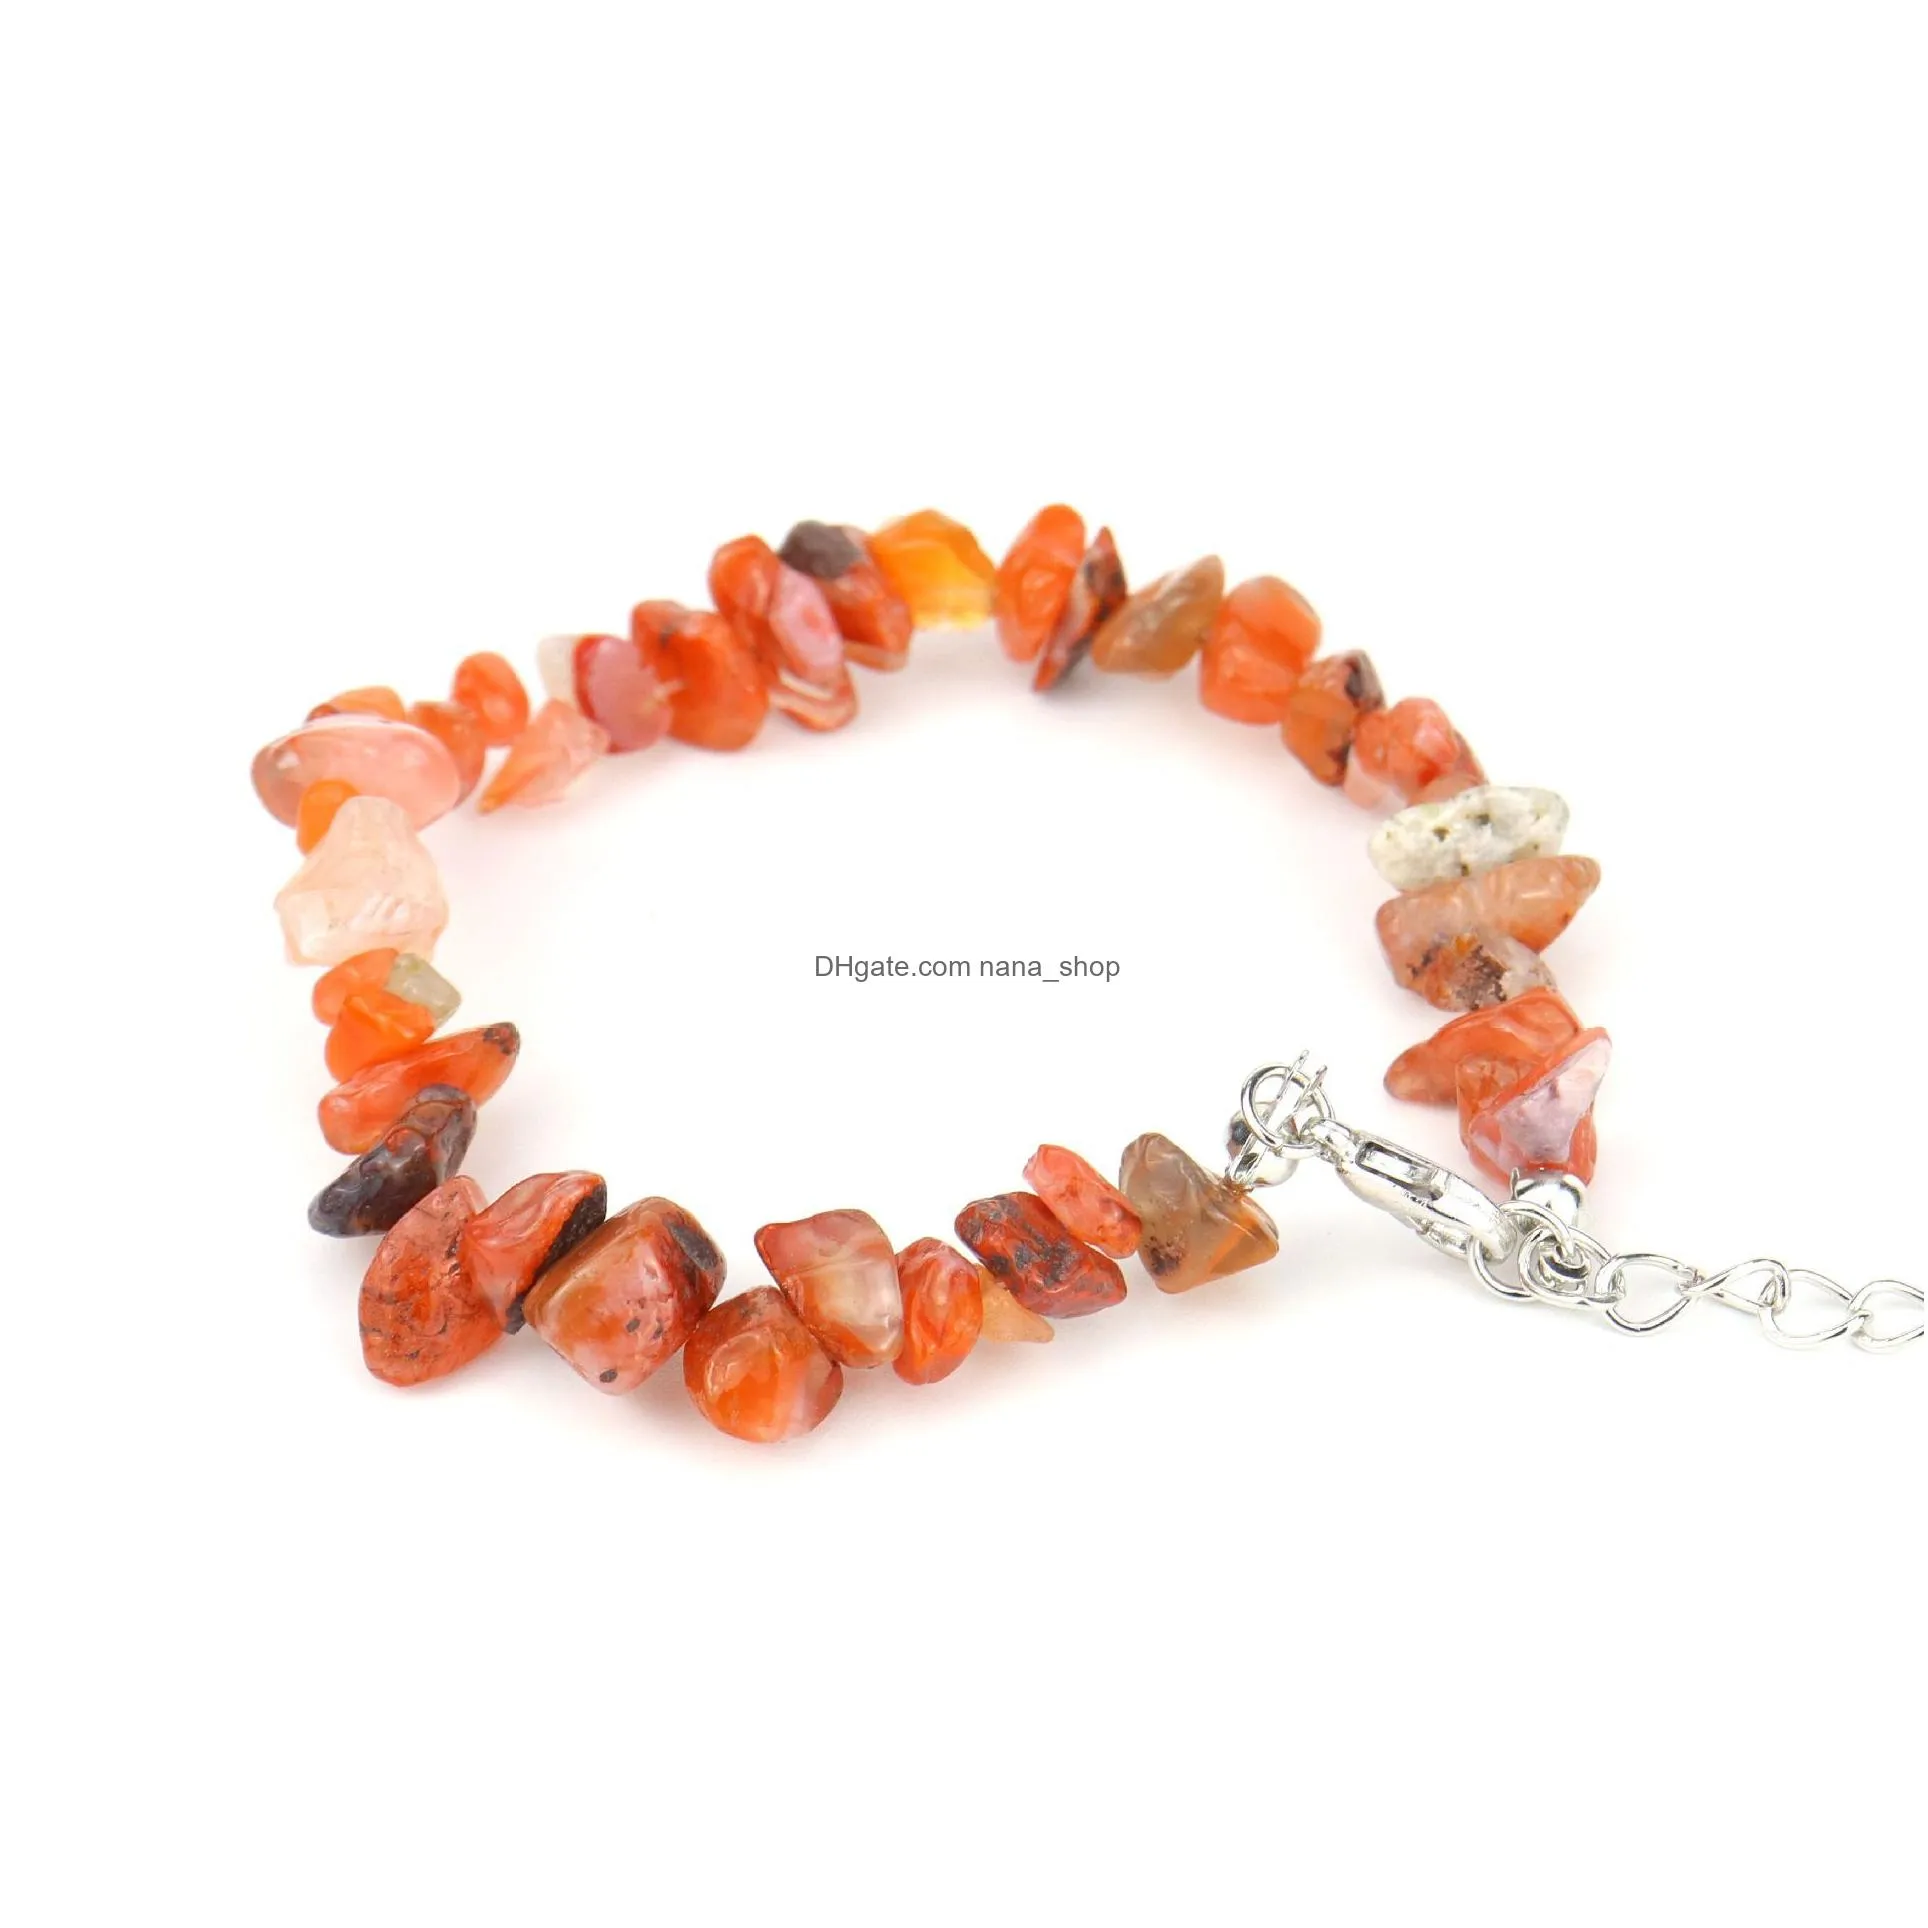 natural gem stone bracelet irregular crystal stretch chip beads link chain bracelets bangles quartz wristband for women